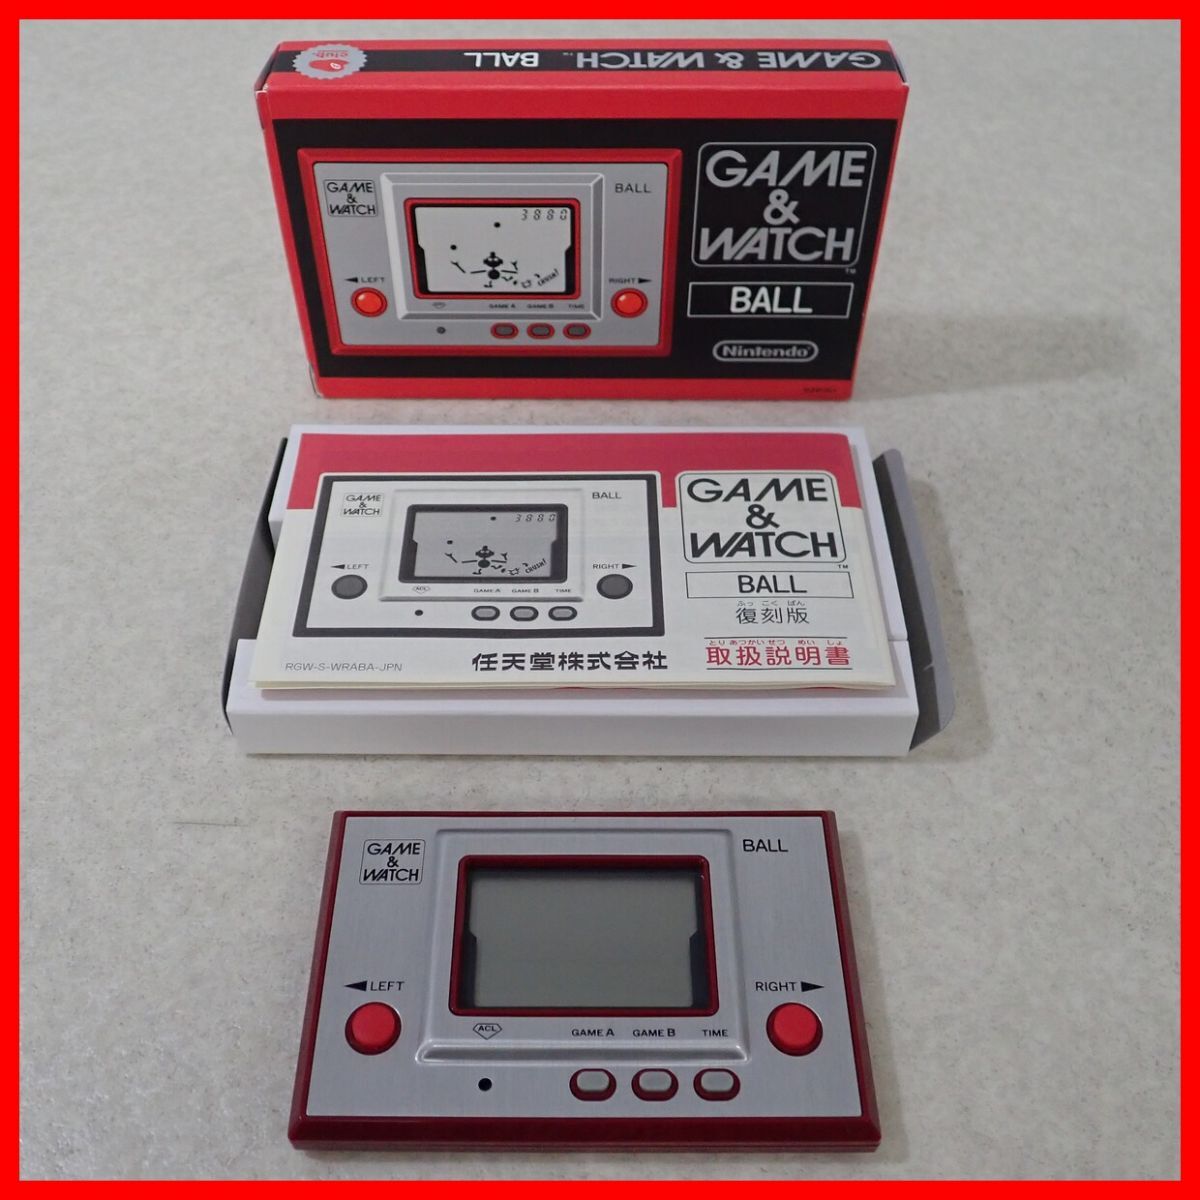  рабочий товар GAME&WATCH BALL Game & Watch мяч Club Nintendo переиздание RGW-001 корпус коробка мнение есть Nintendo nintendo club.nintendo[PP